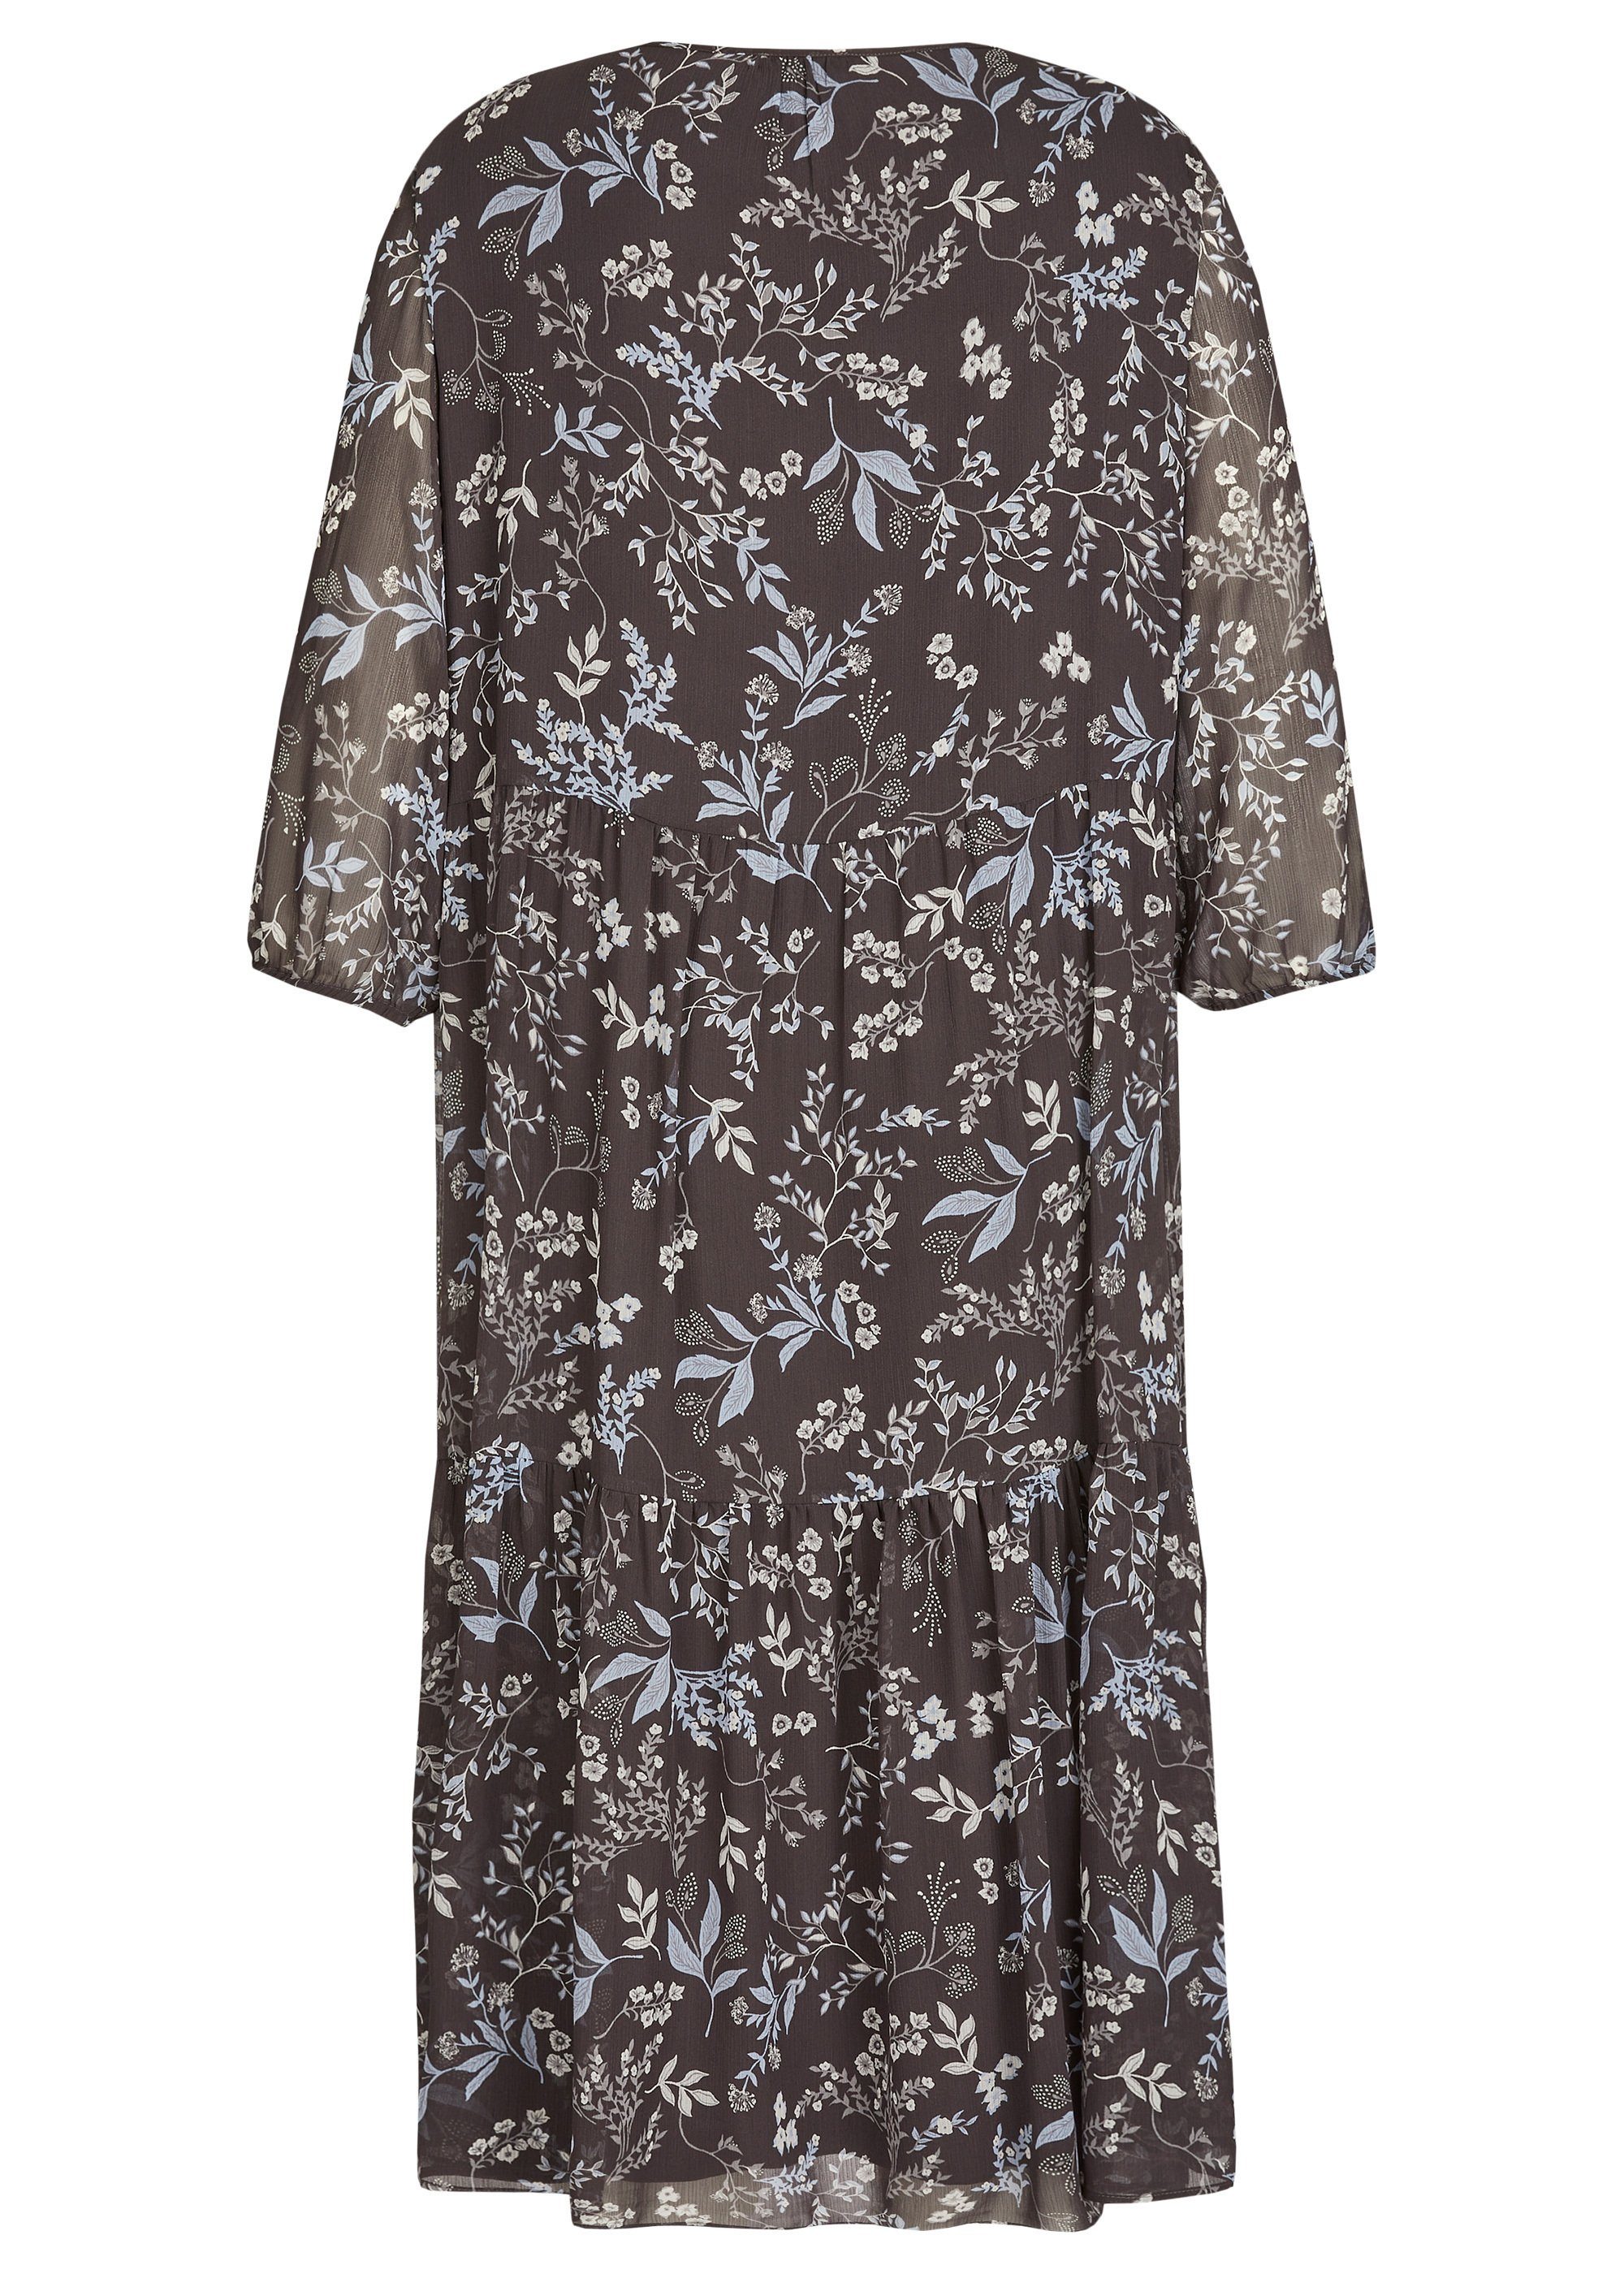 VIA Stufenkleid Verspieltes Allover-Print DUE mit A-Linien-Kleid APPIA floralem